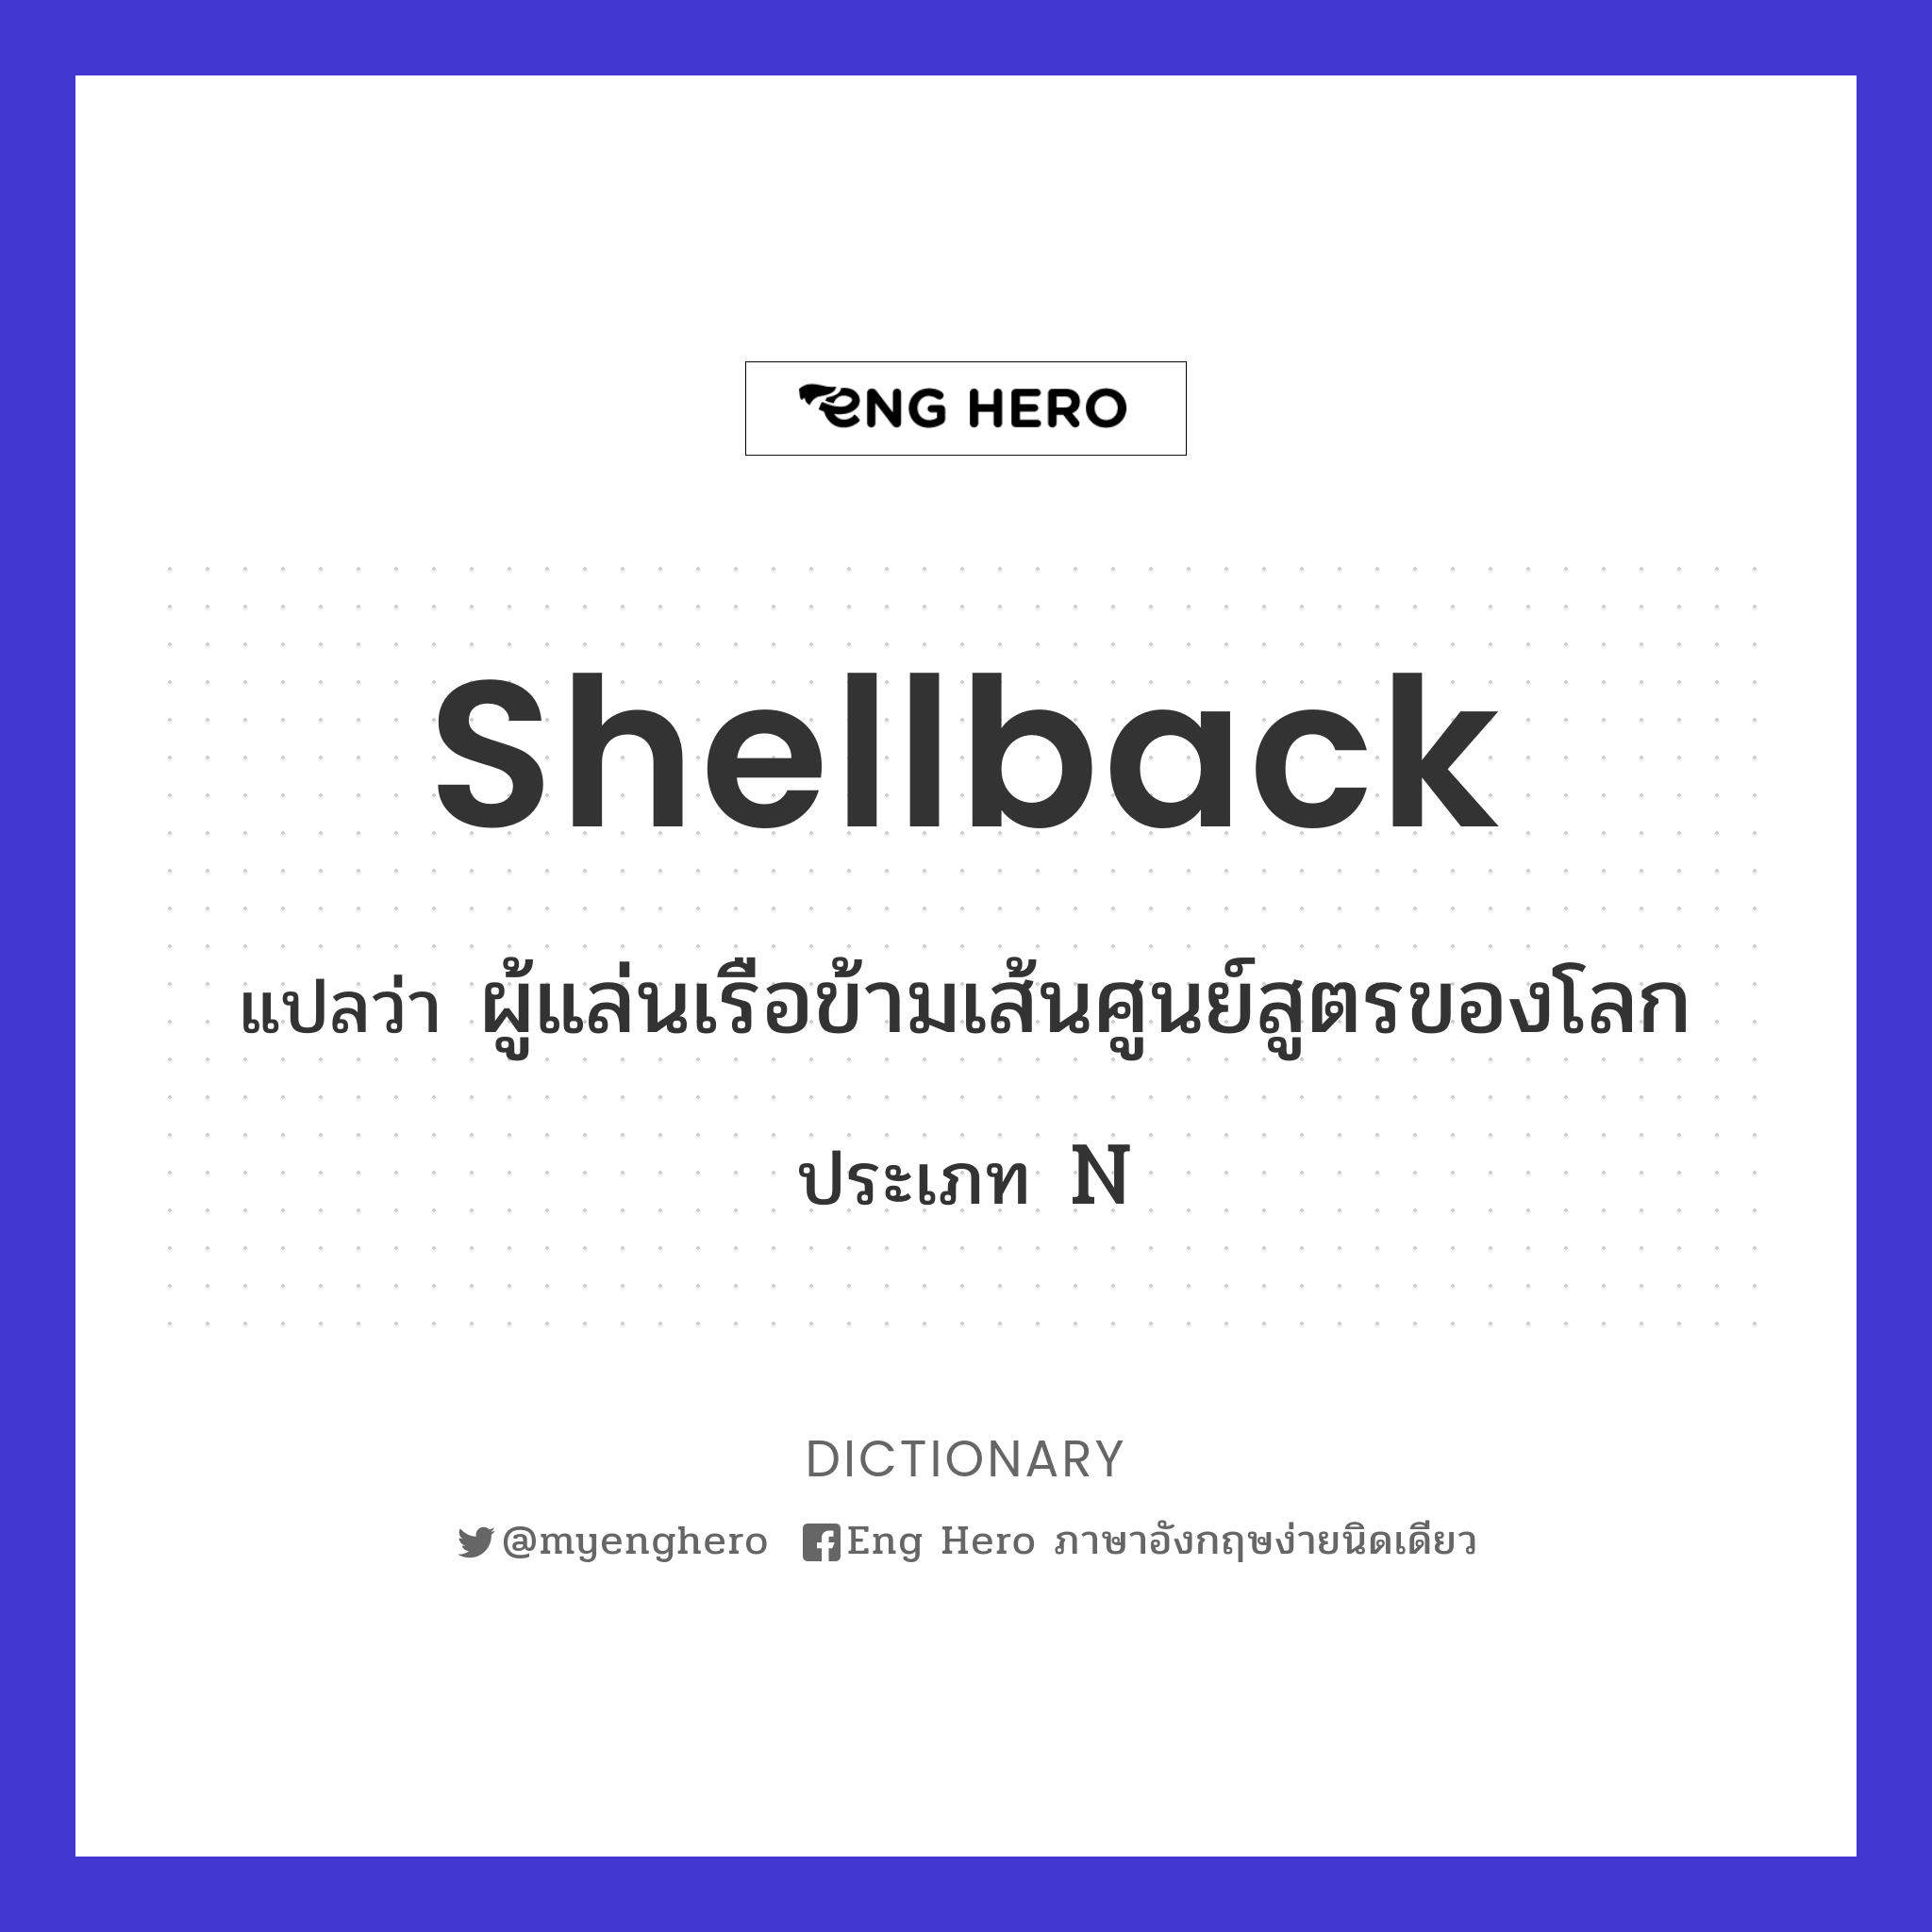 shellback